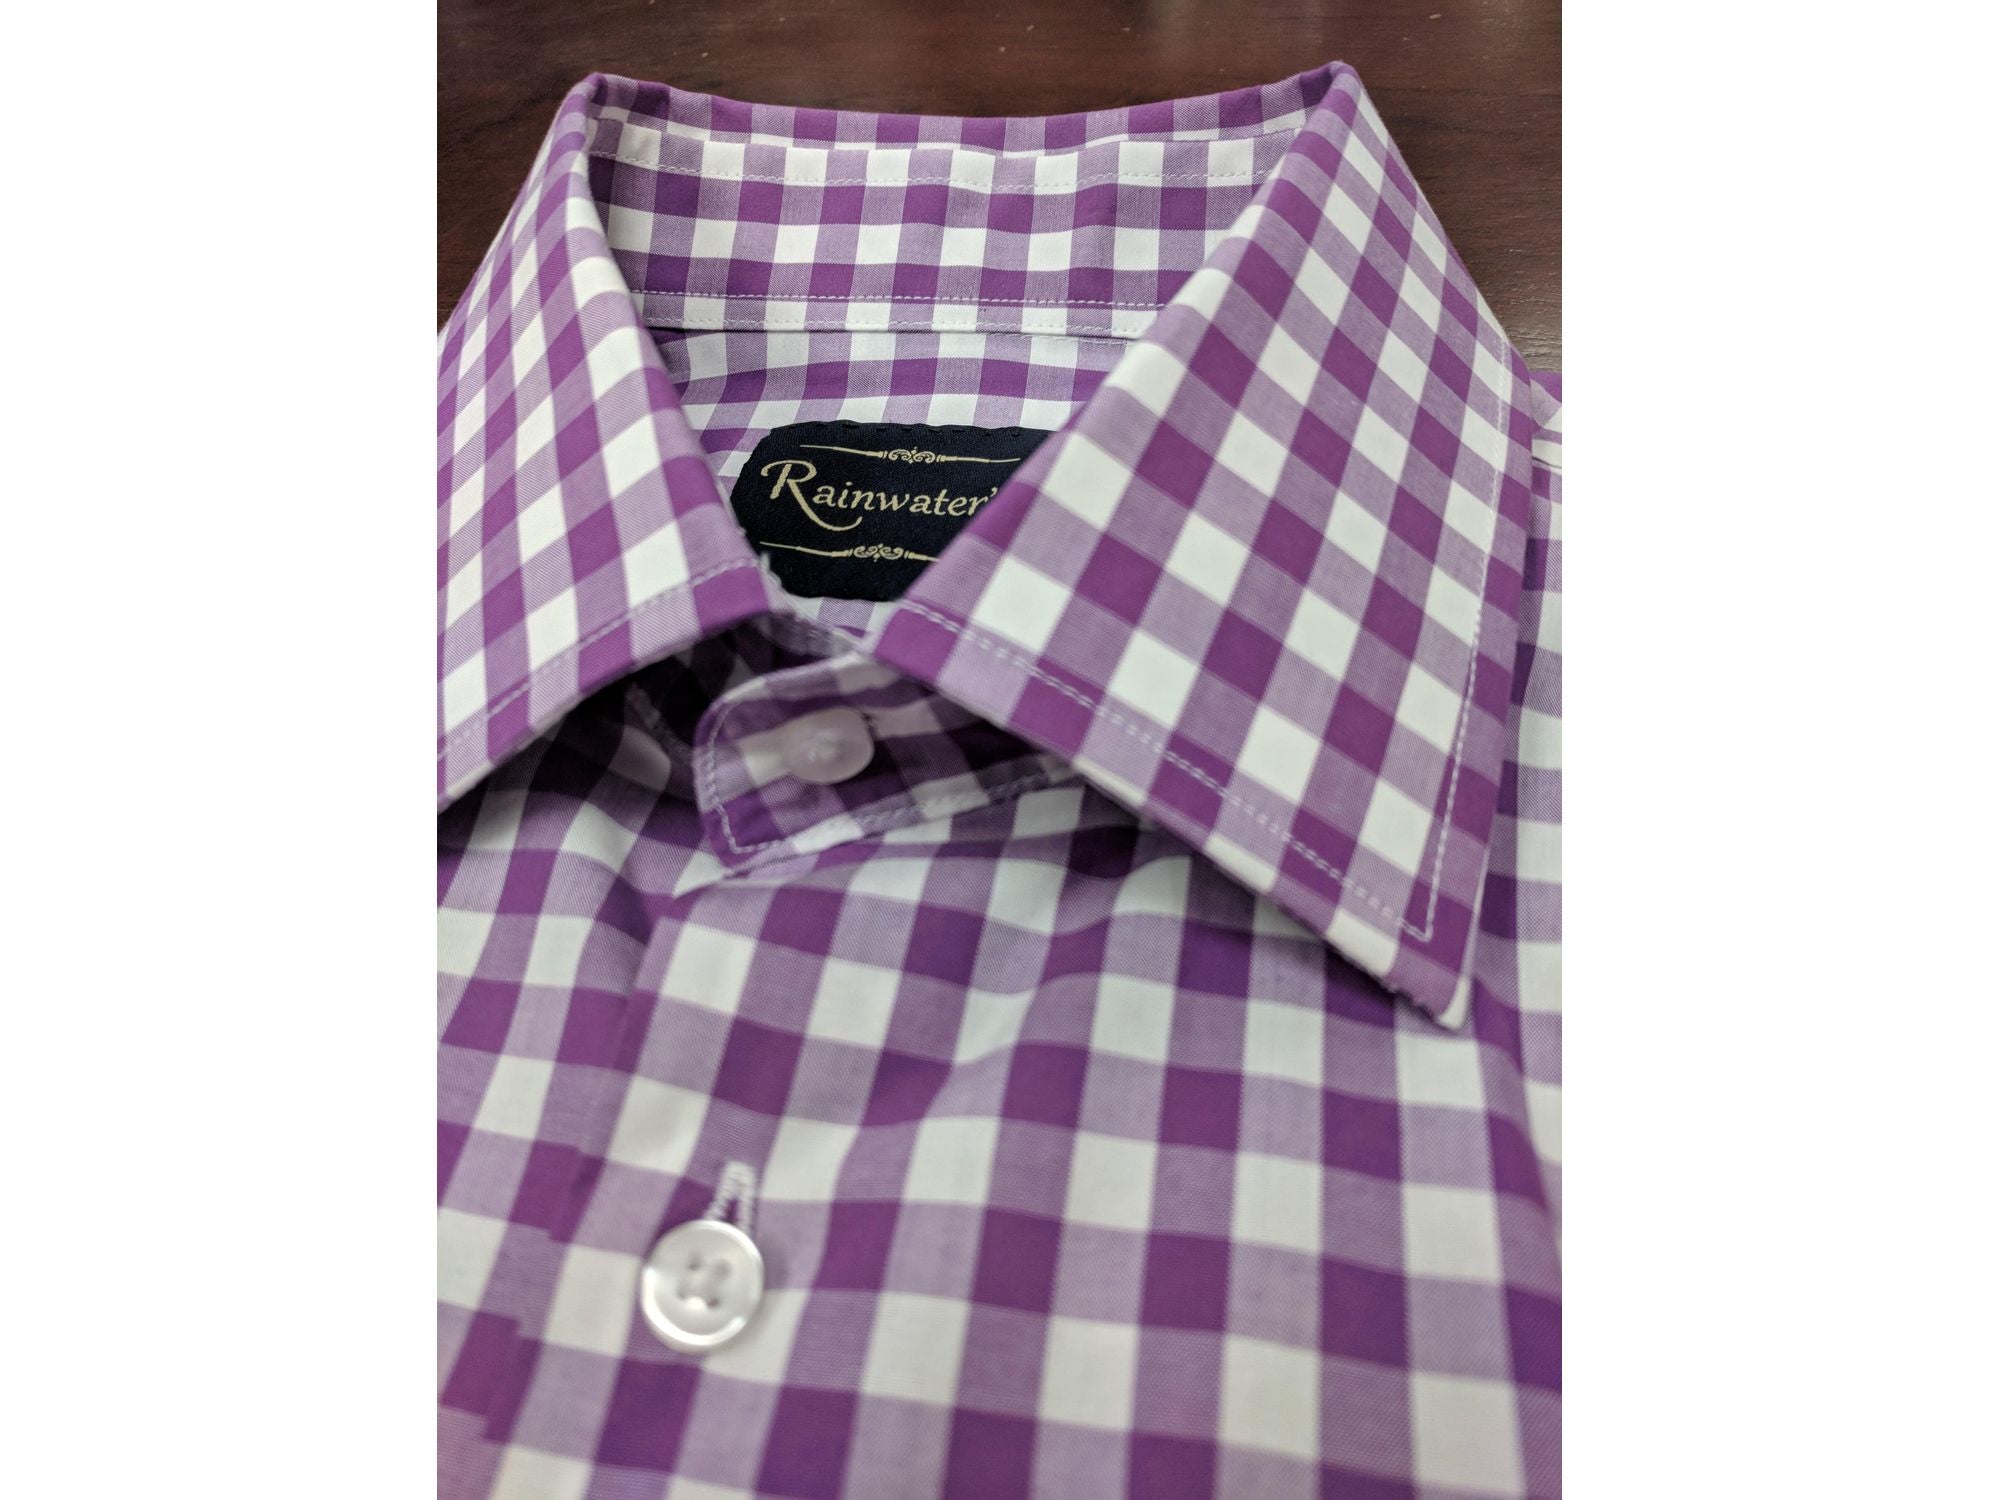 Rainwater's 100% Cotton Gingham Dress Shirt in Purple - Rainwater's Men's Clothing and Tuxedo Rental